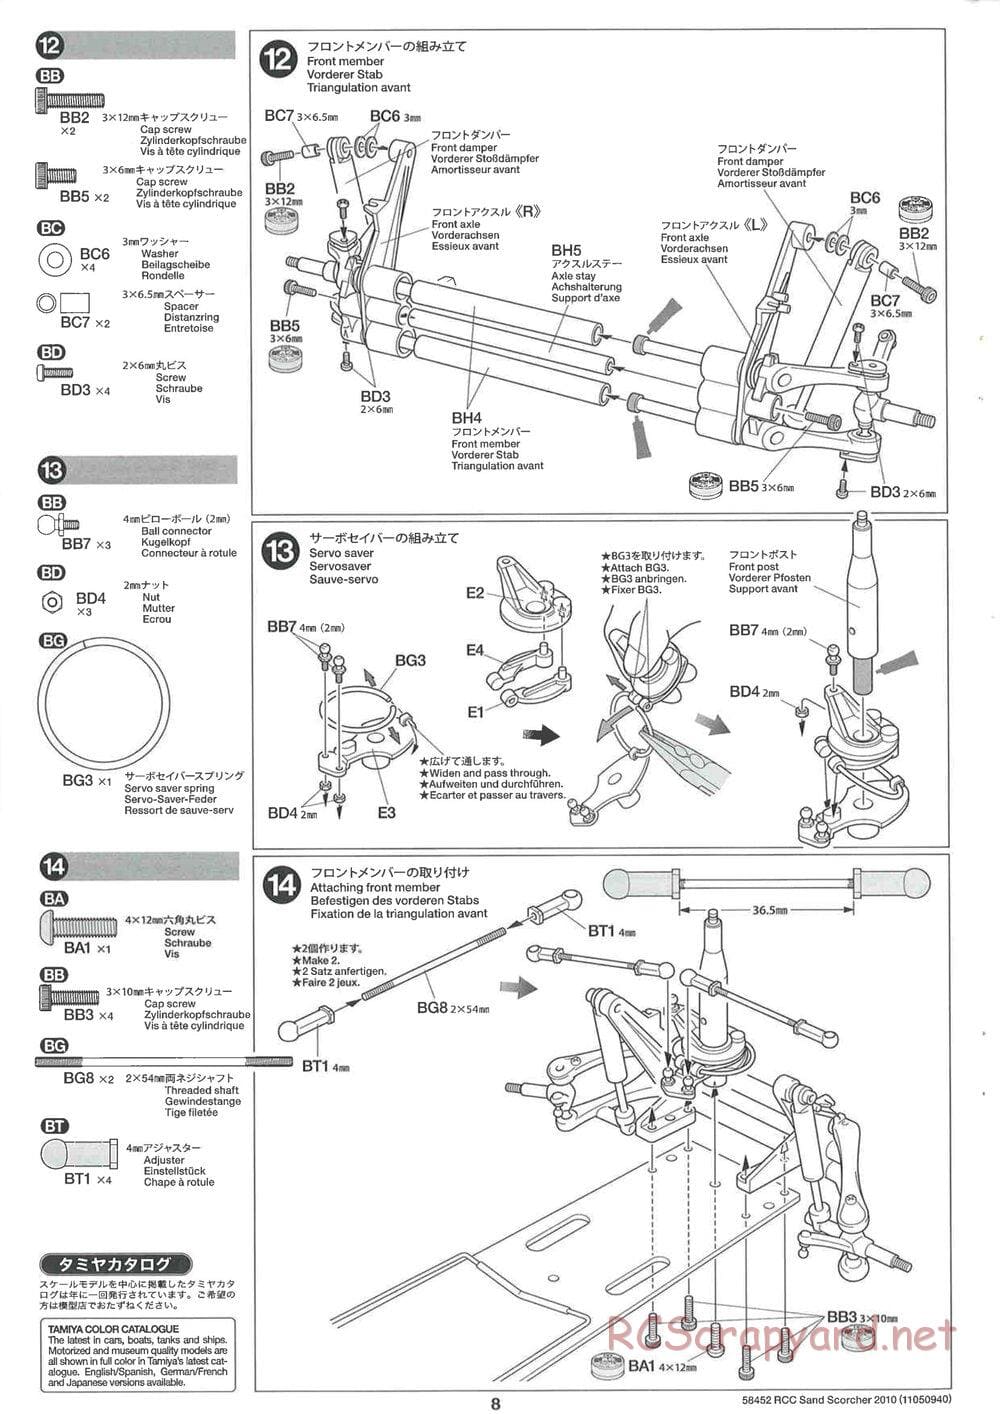 Tamiya - Sand Scorcher 2010 - SRB v1 Chassis - Manual - Page 8